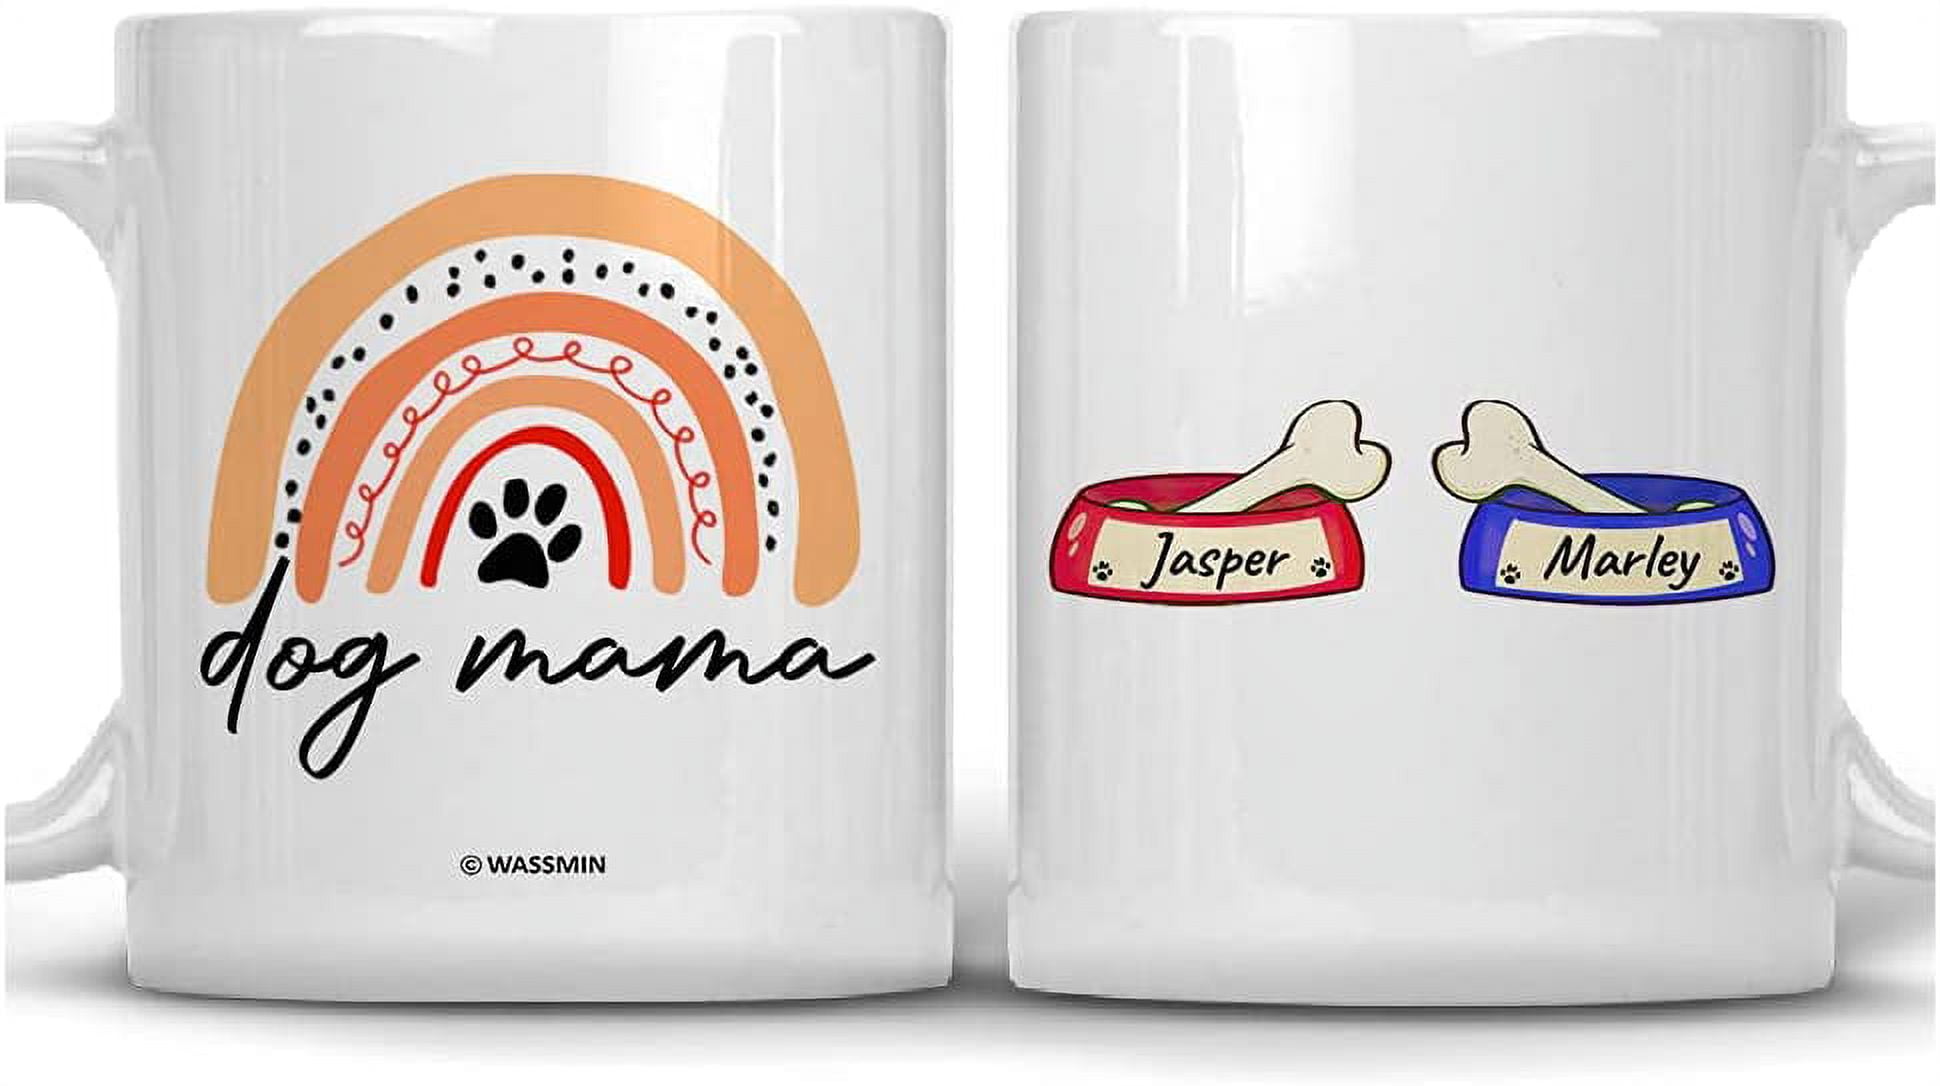 Fur Mama, Best Dog Mom Mugs, Customized Mugs for Dog Lovers